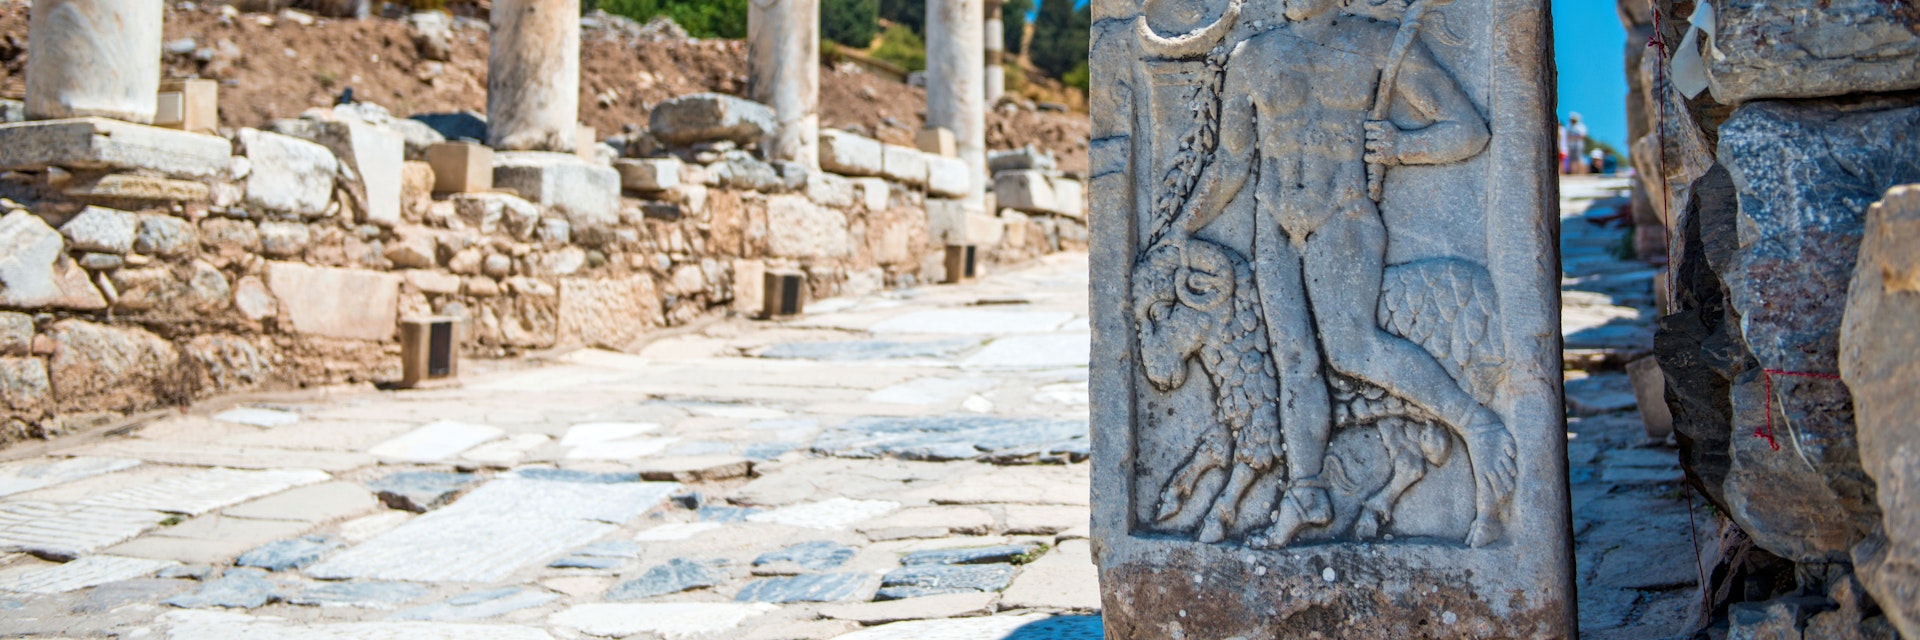 Ephesus Ram Figure, Turkey.Archaeological site, Ephesus - Turkey. The entrance to one of the brothels in Ancient Ephesus was marked by a (carved) footprint.
Turkey brothel Ephesus
